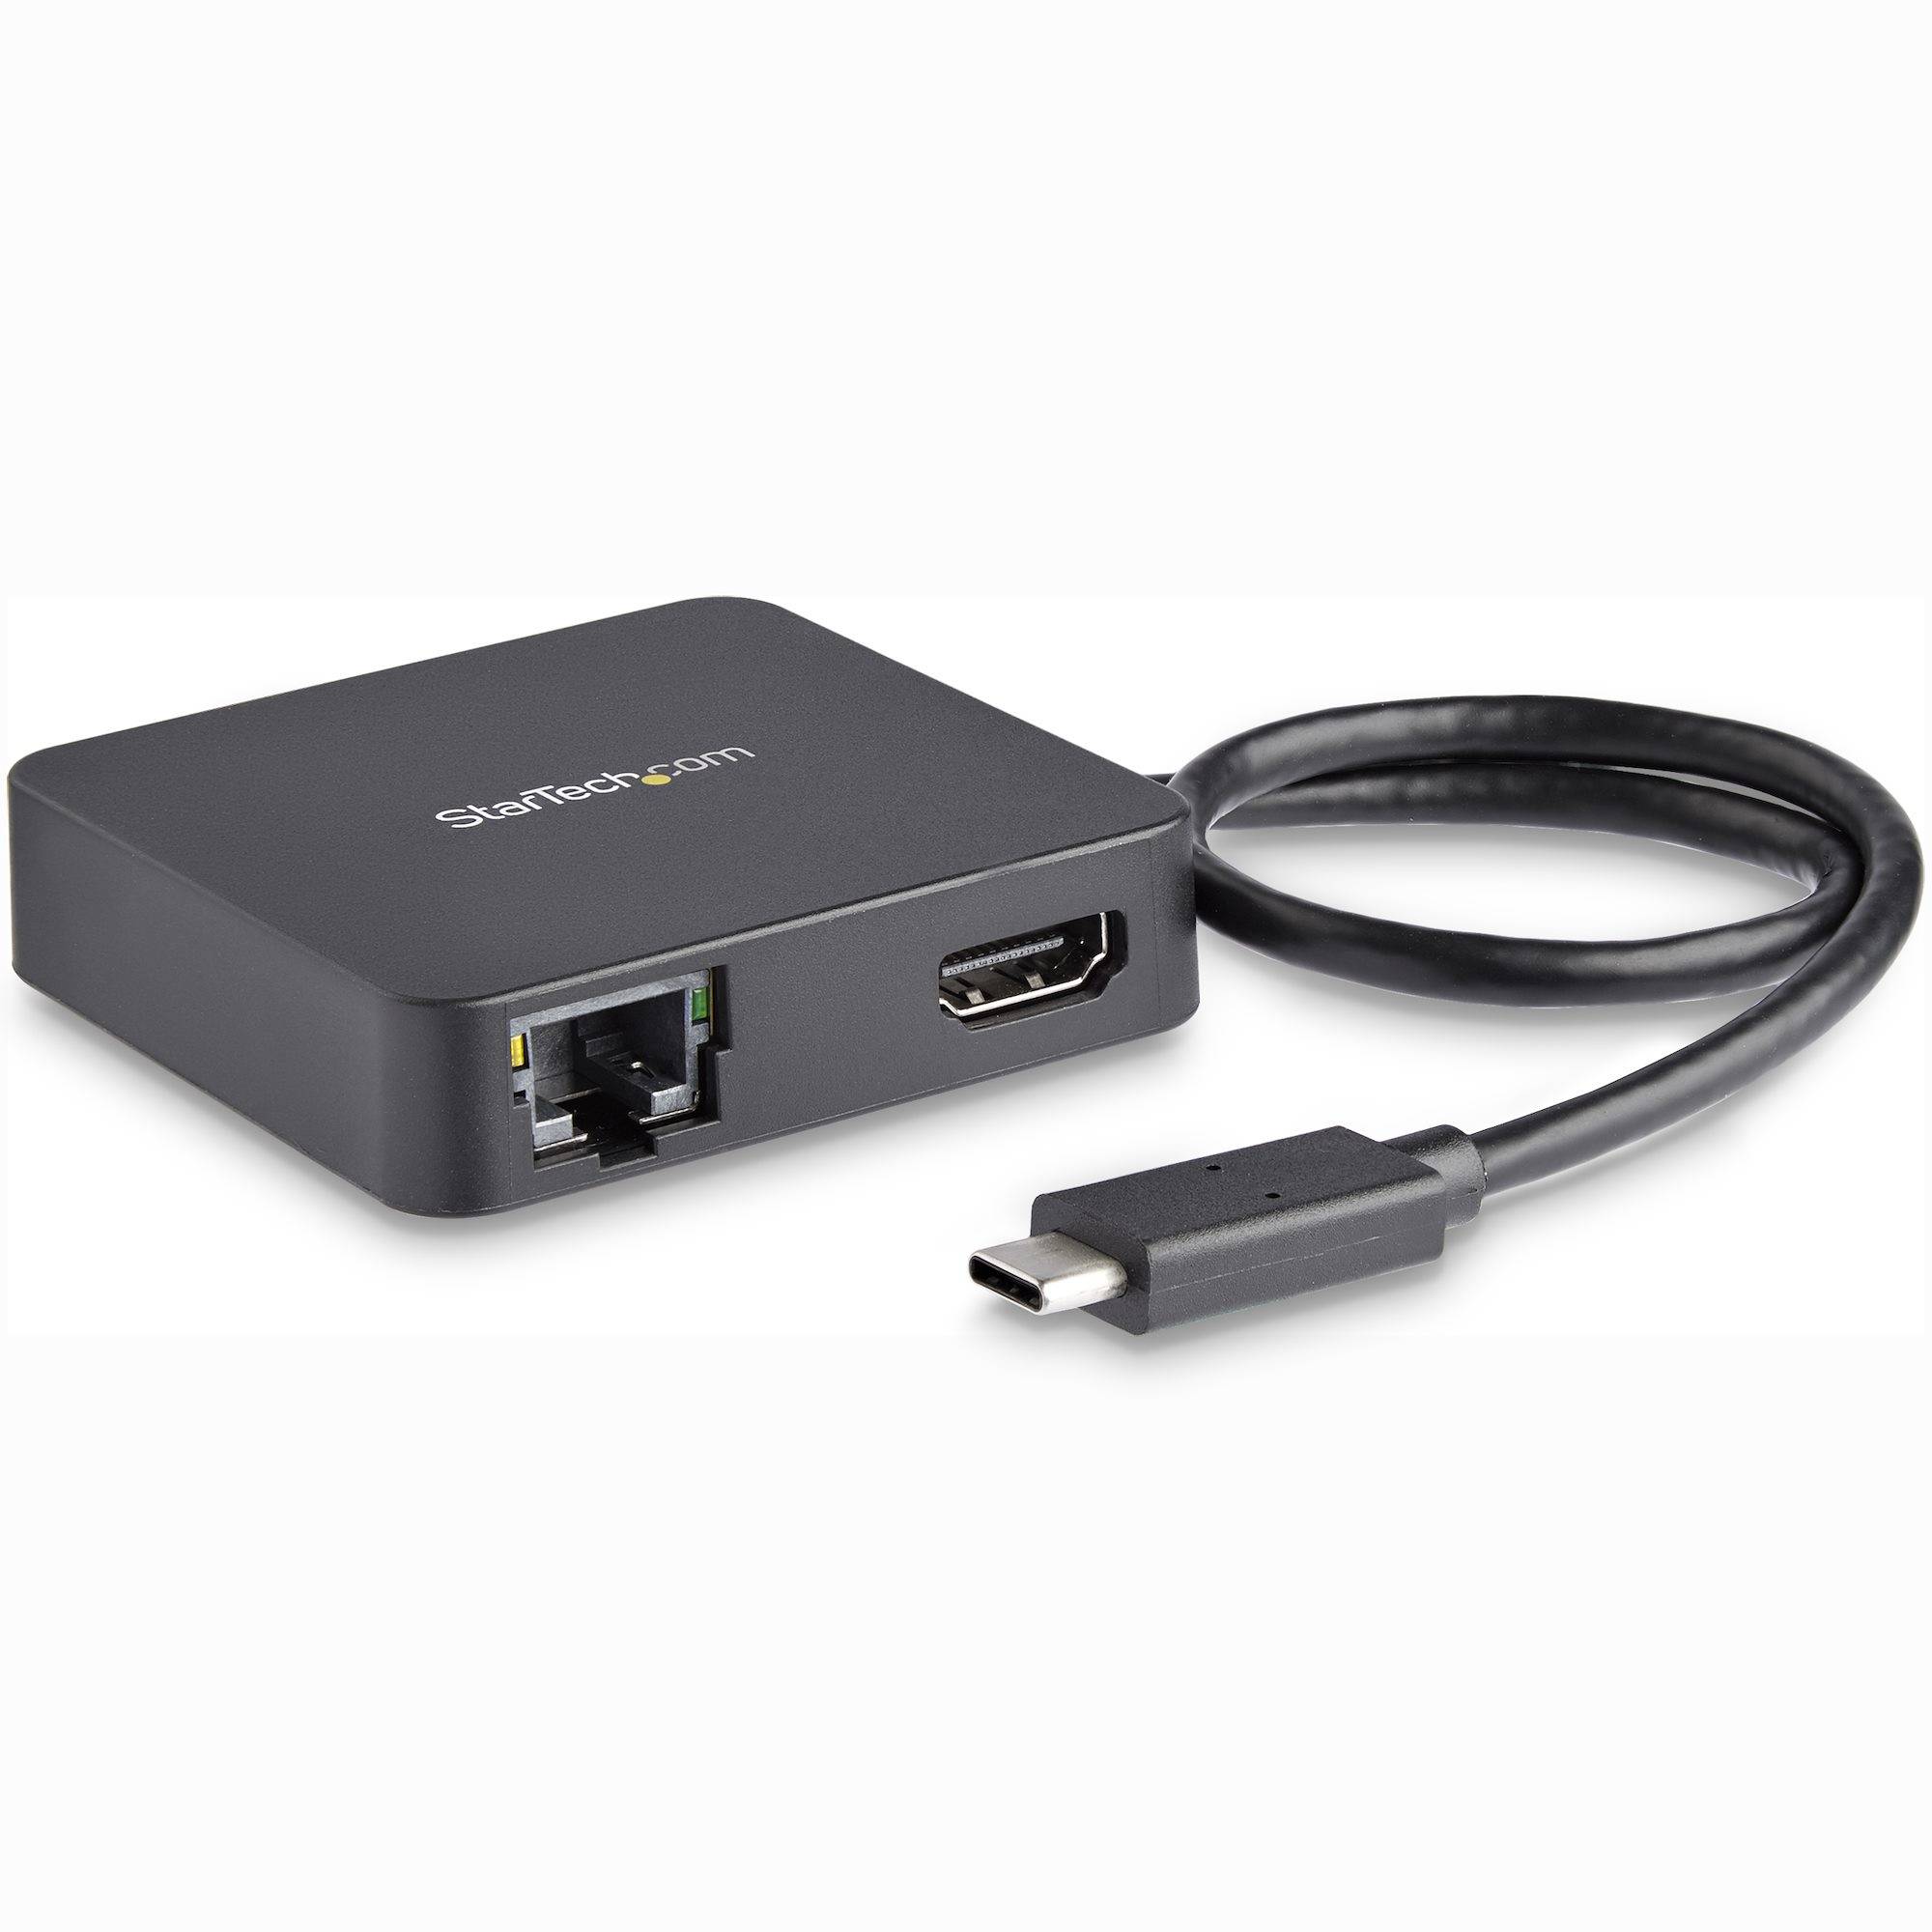 Rca Informatique - Image du produit : USB-C MULTIPORT ADAPTER - WITH 4K HDMI GBE USB-C USB-A PORTS